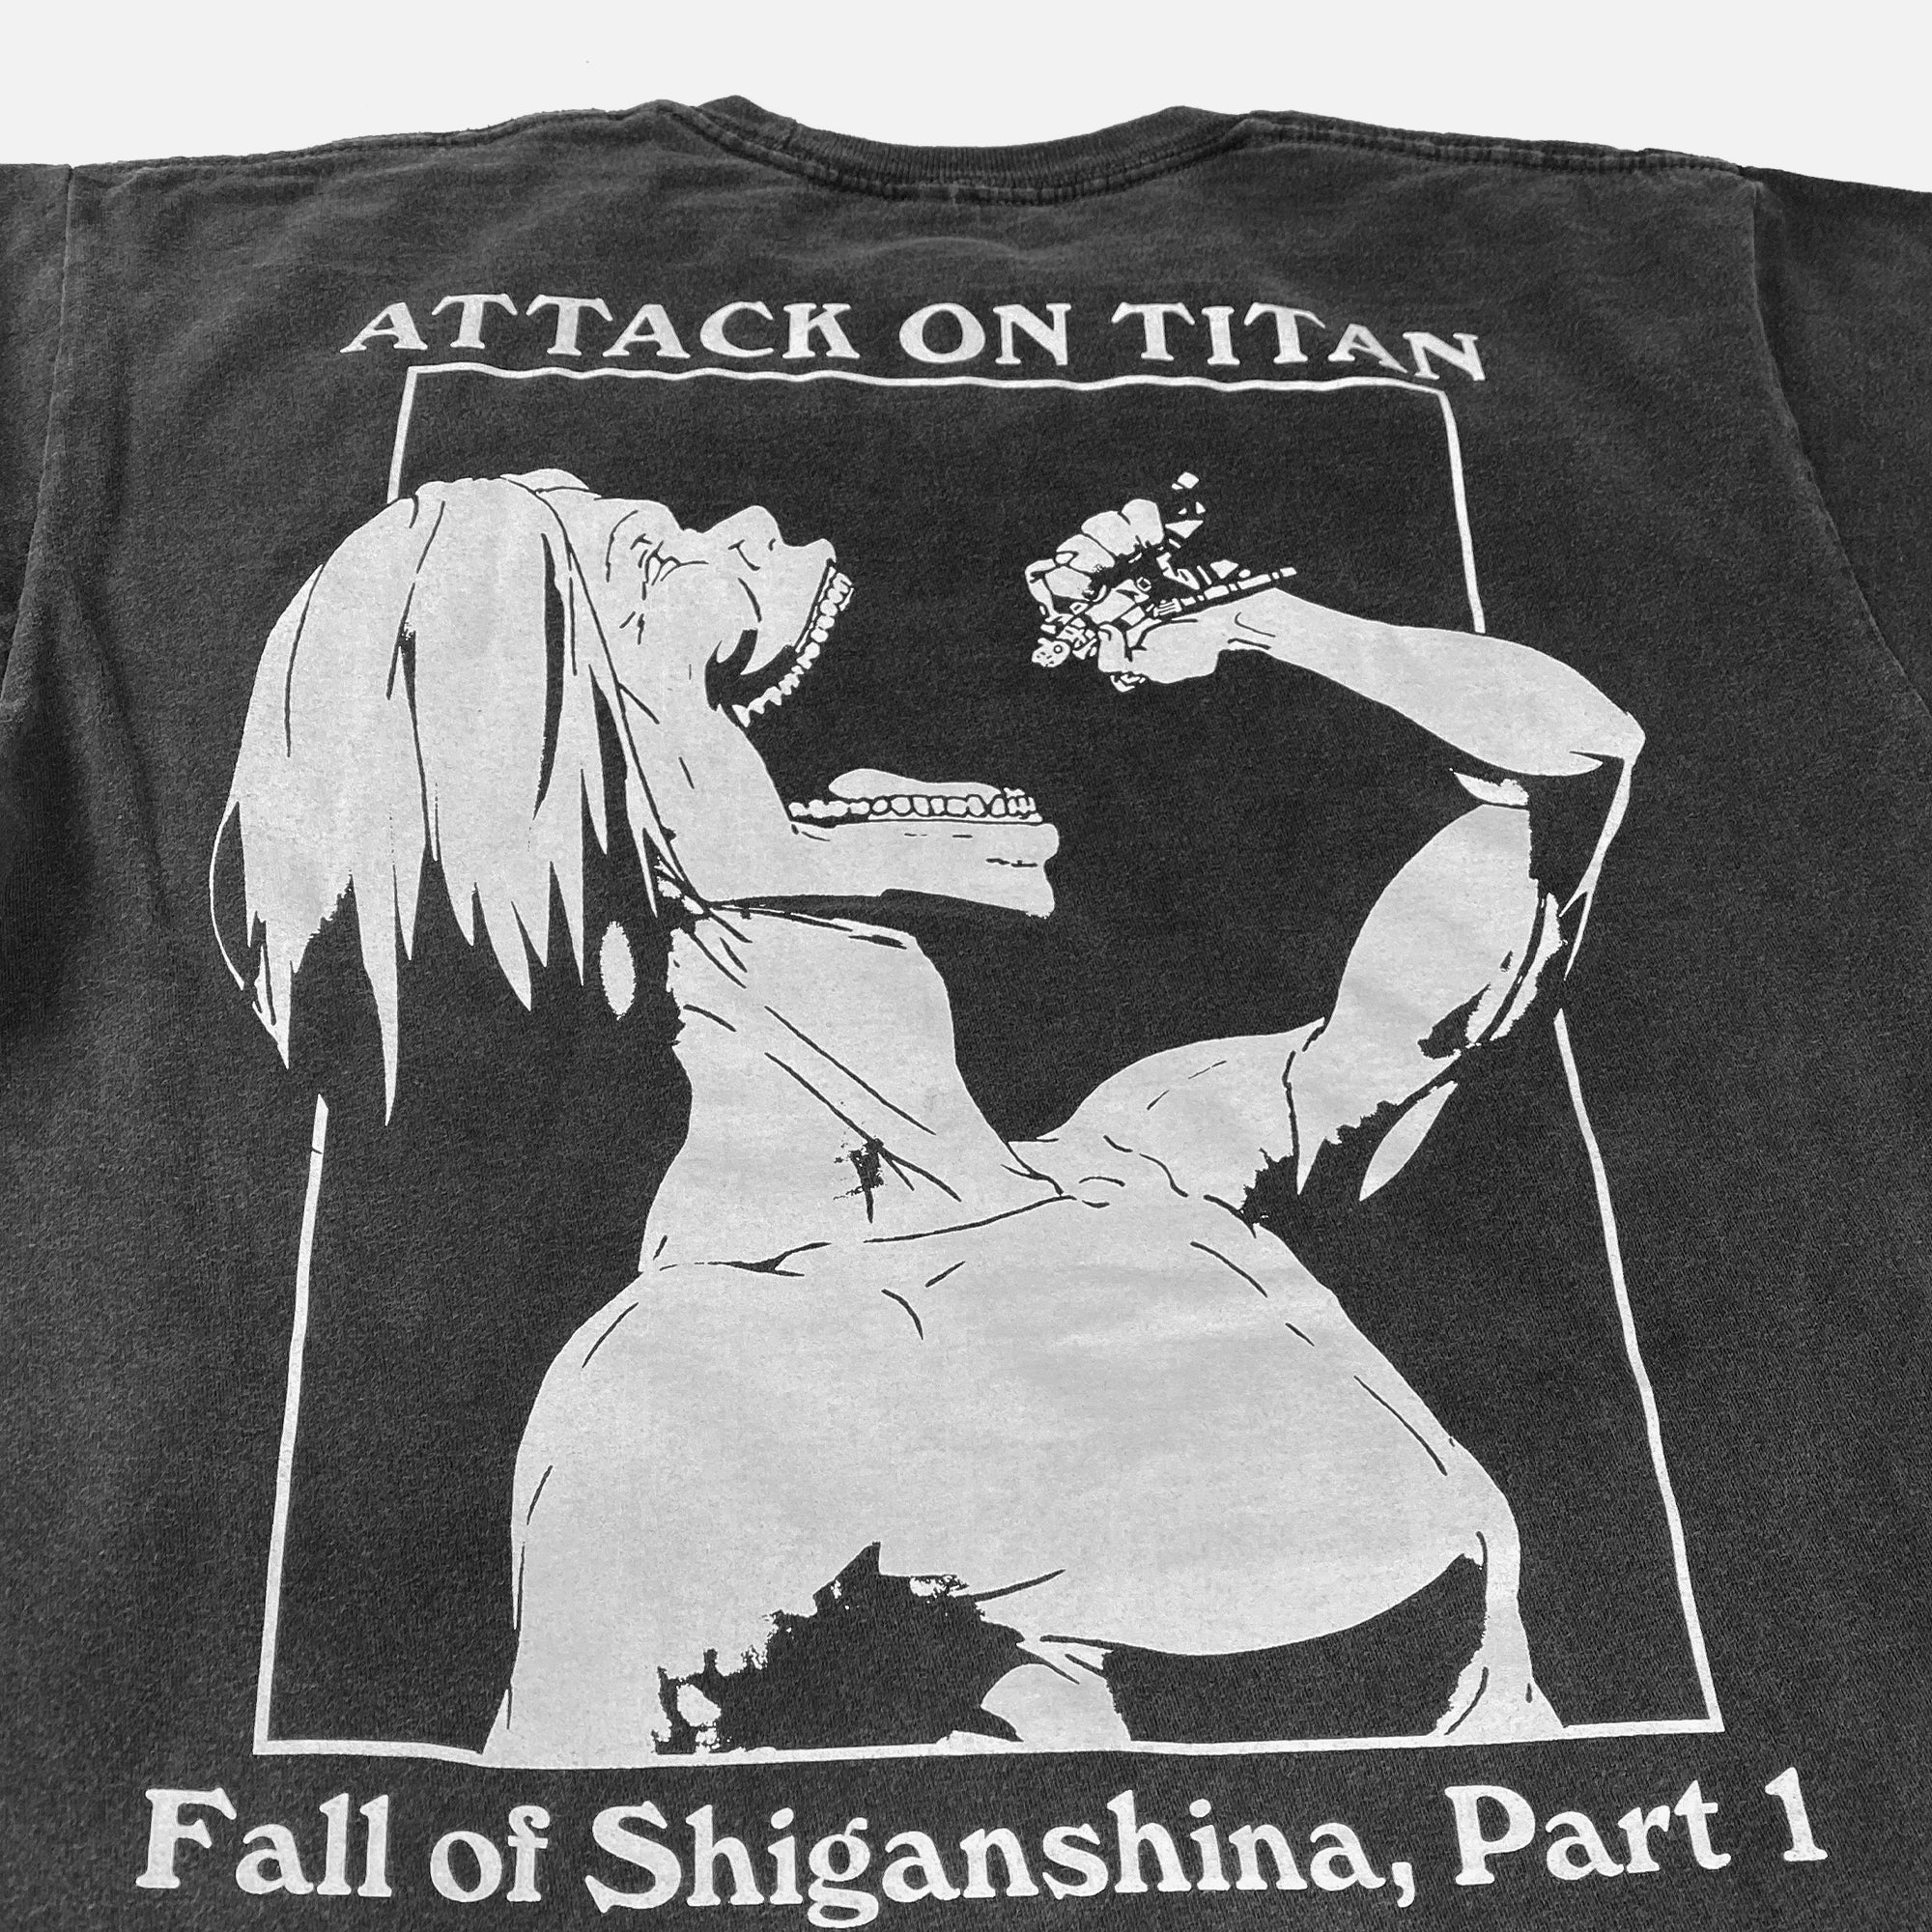 Attack on Titan - Fall of Shiganshina Pt. 1 T-Shirt - Crunchyroll Exclusive! image count 2